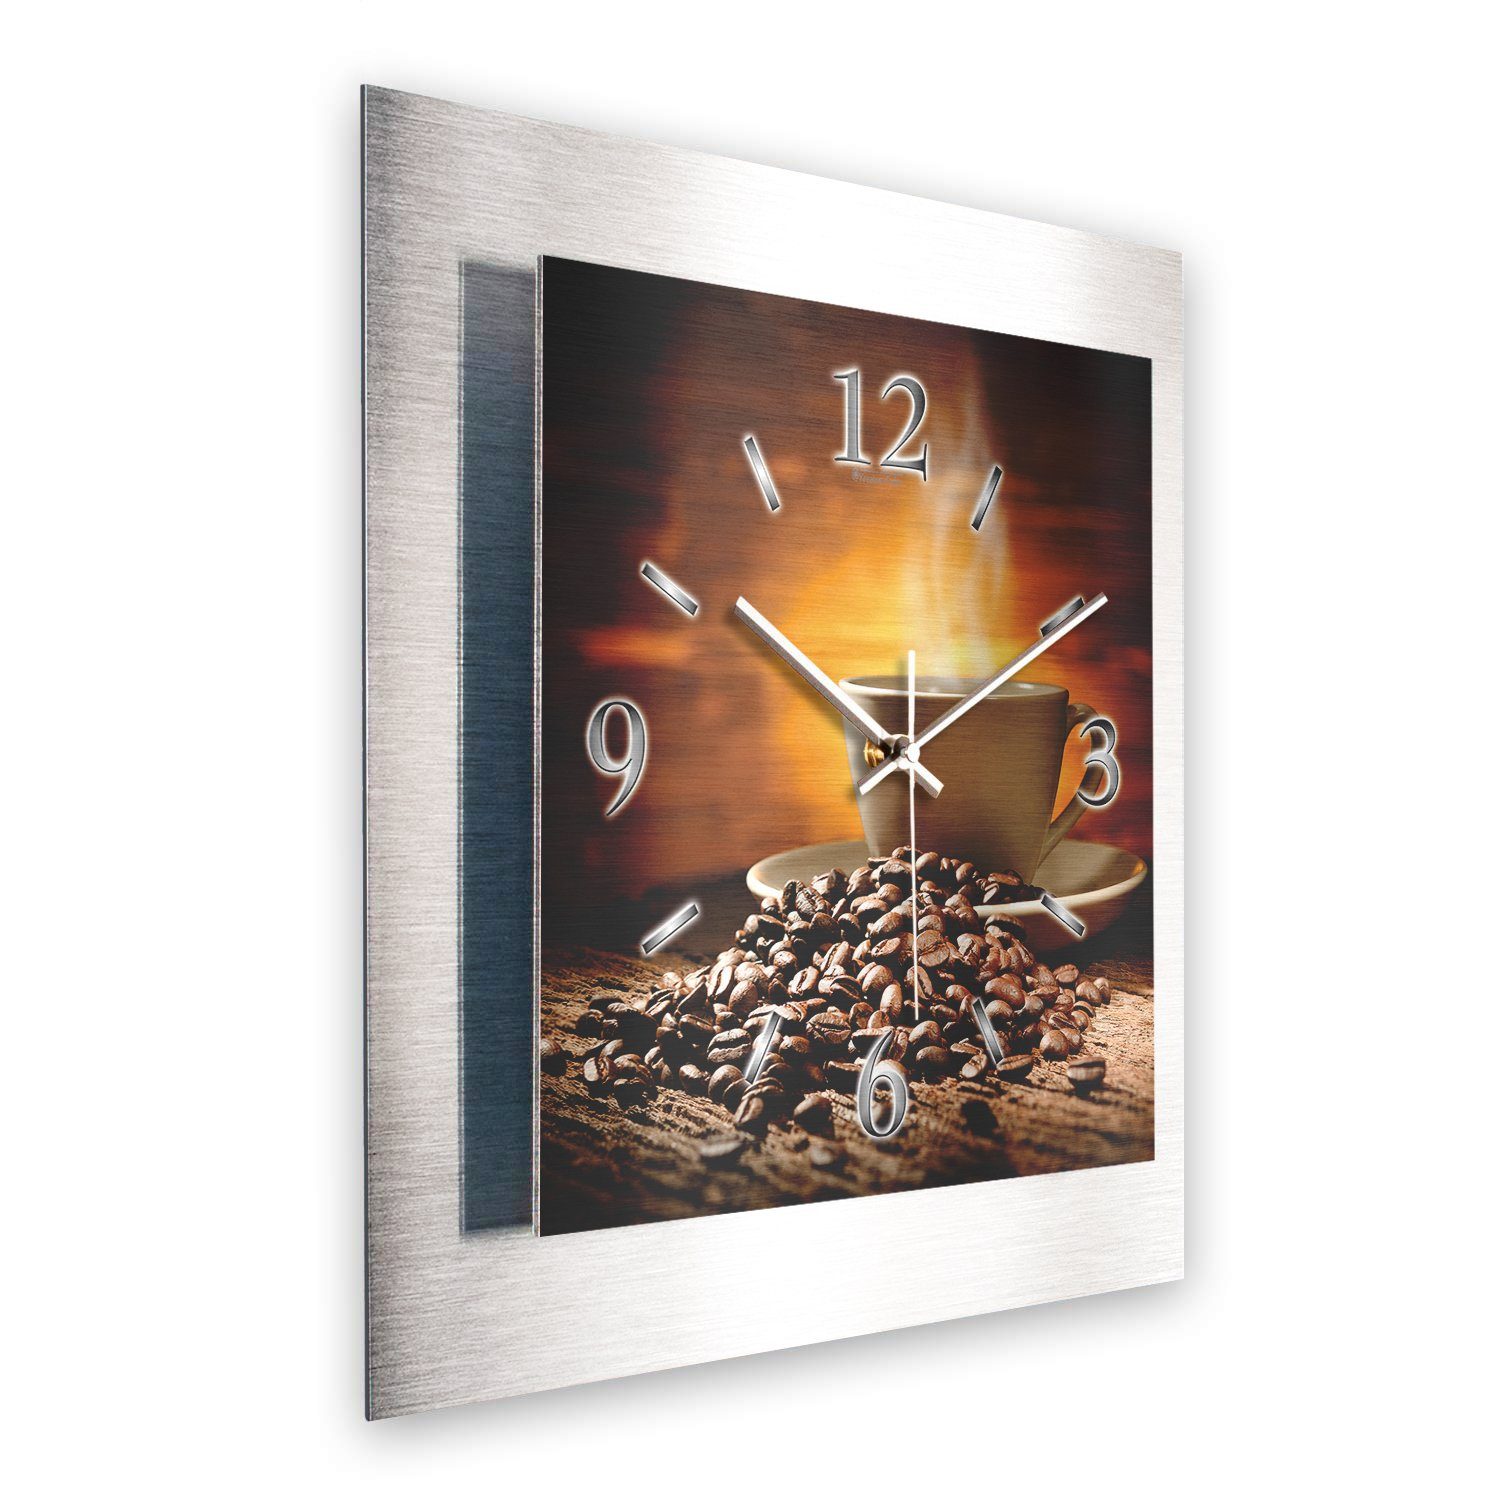 Kreative Feder Wanduhr aus Kaffee“ „Frischer einzigartiges Uhrwerk) Zwei-Platten-Design; (3D-Wölbung; 3D gebürstetem flüsterleises Designer-Wanduhr Aluminium